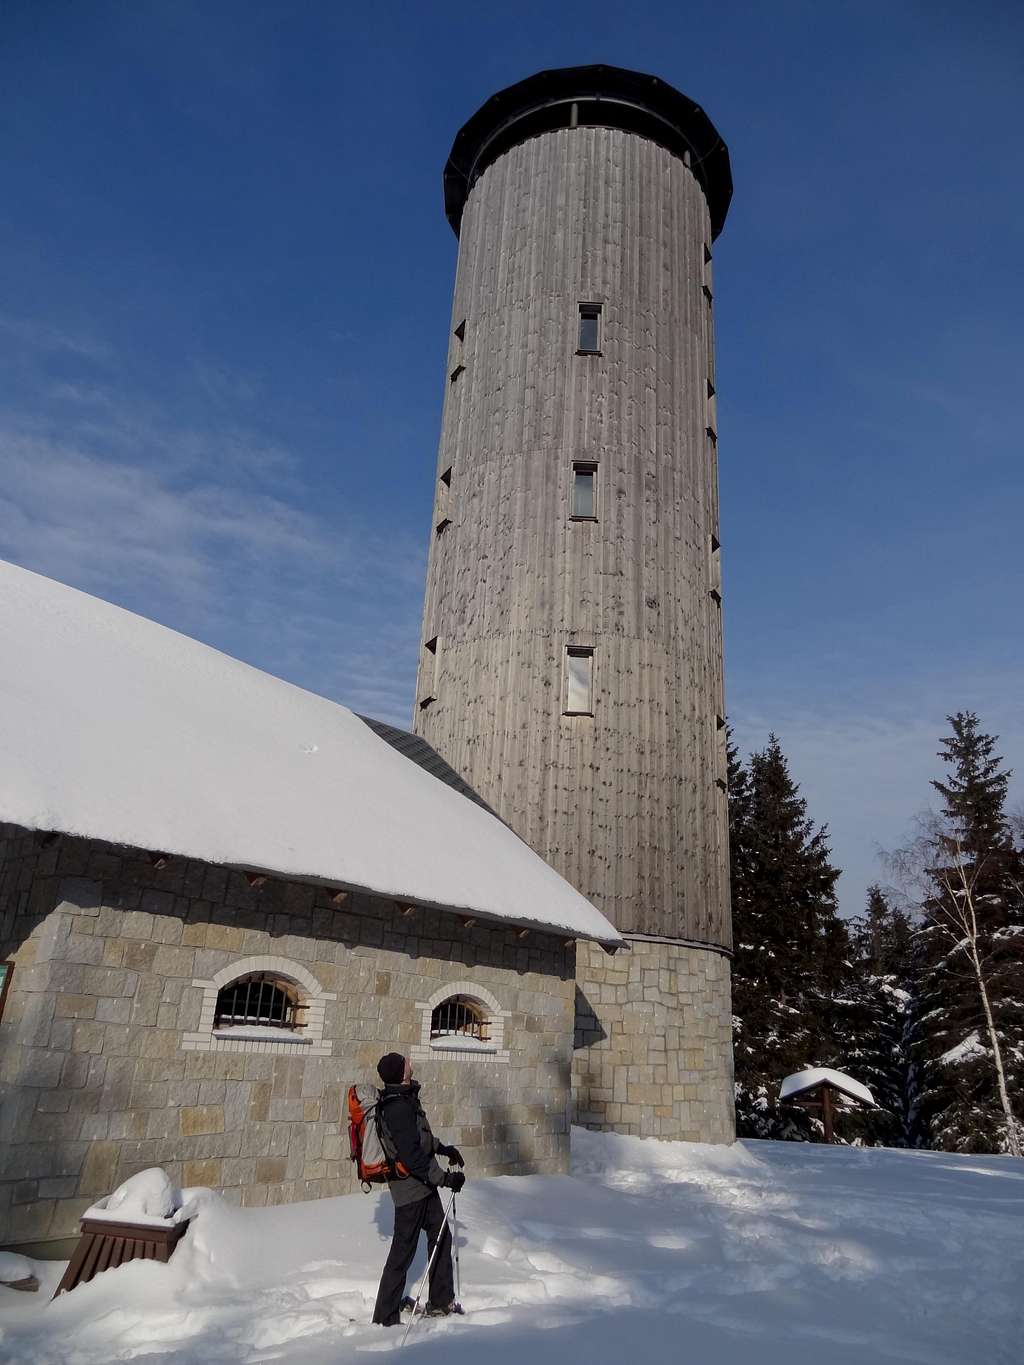 Borówkowa Góra outlook tower